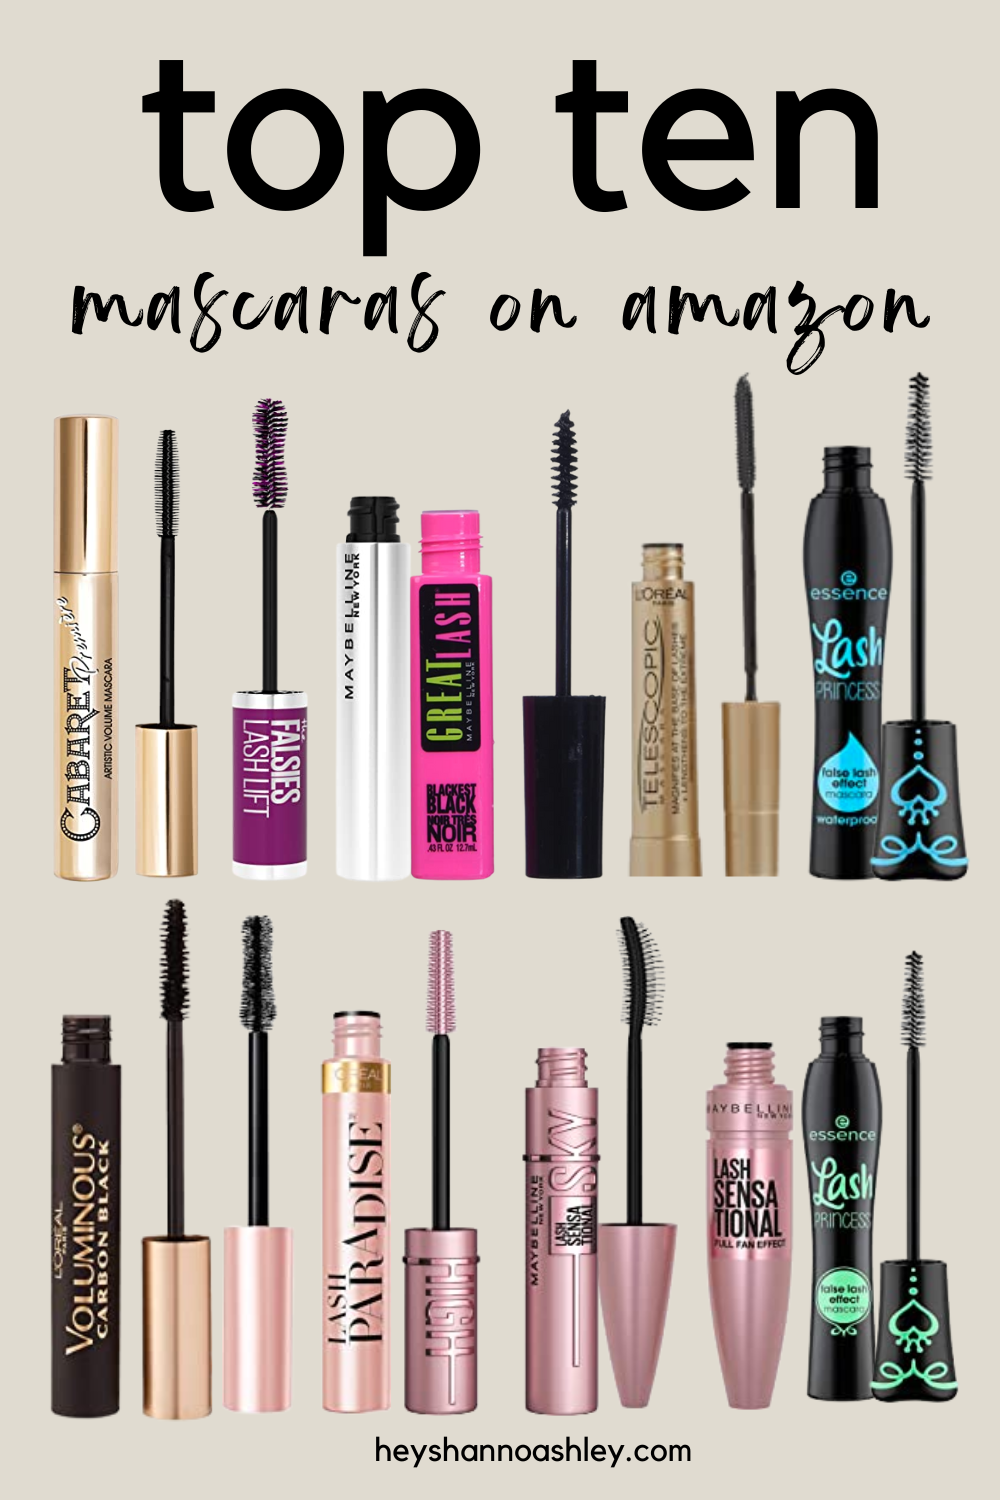 Products we love: Le Volume De Chanel mascara